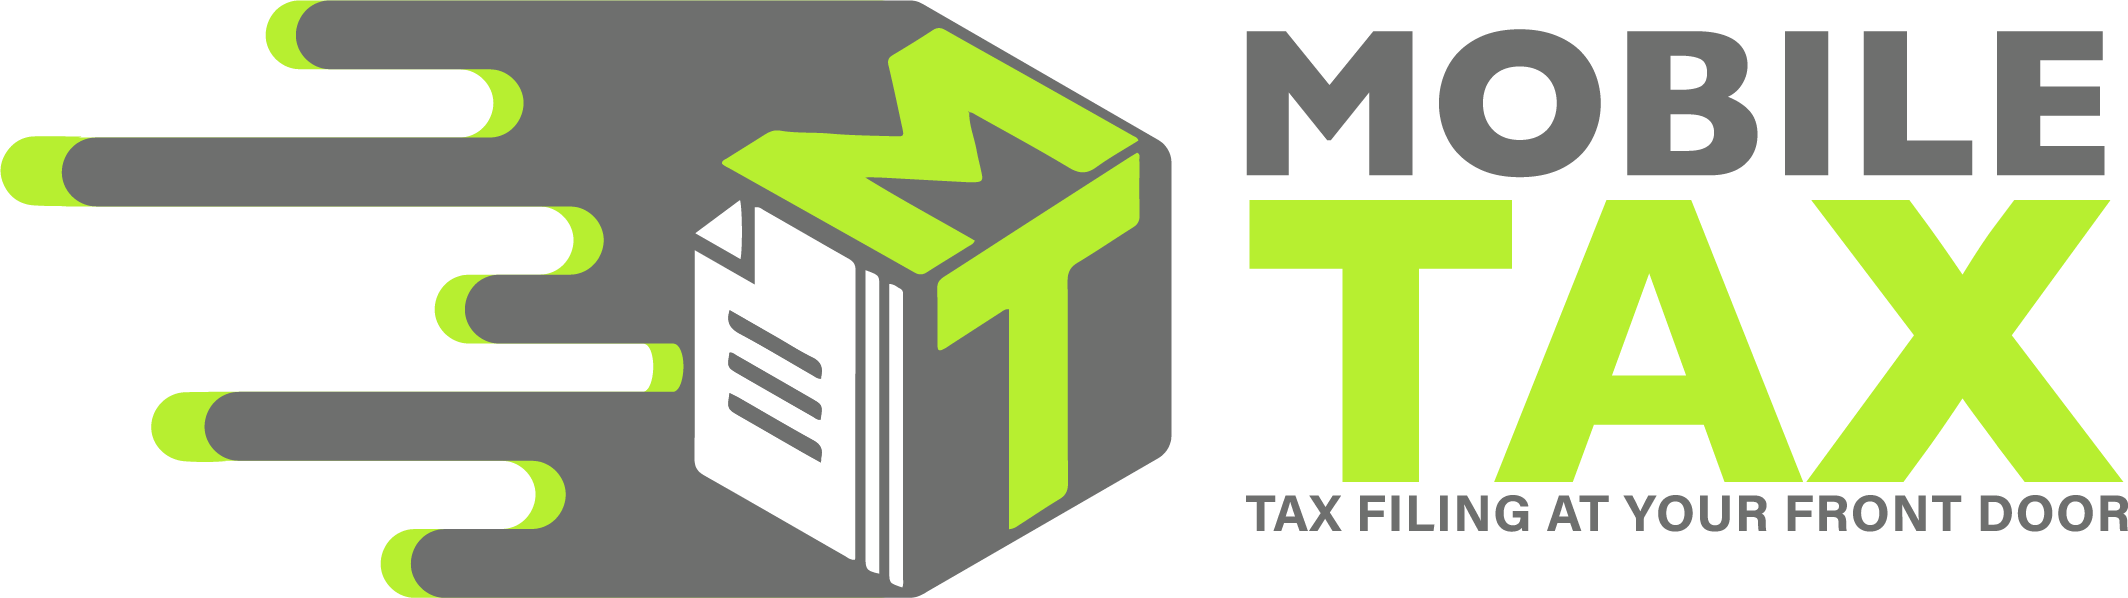 Mobile Tax